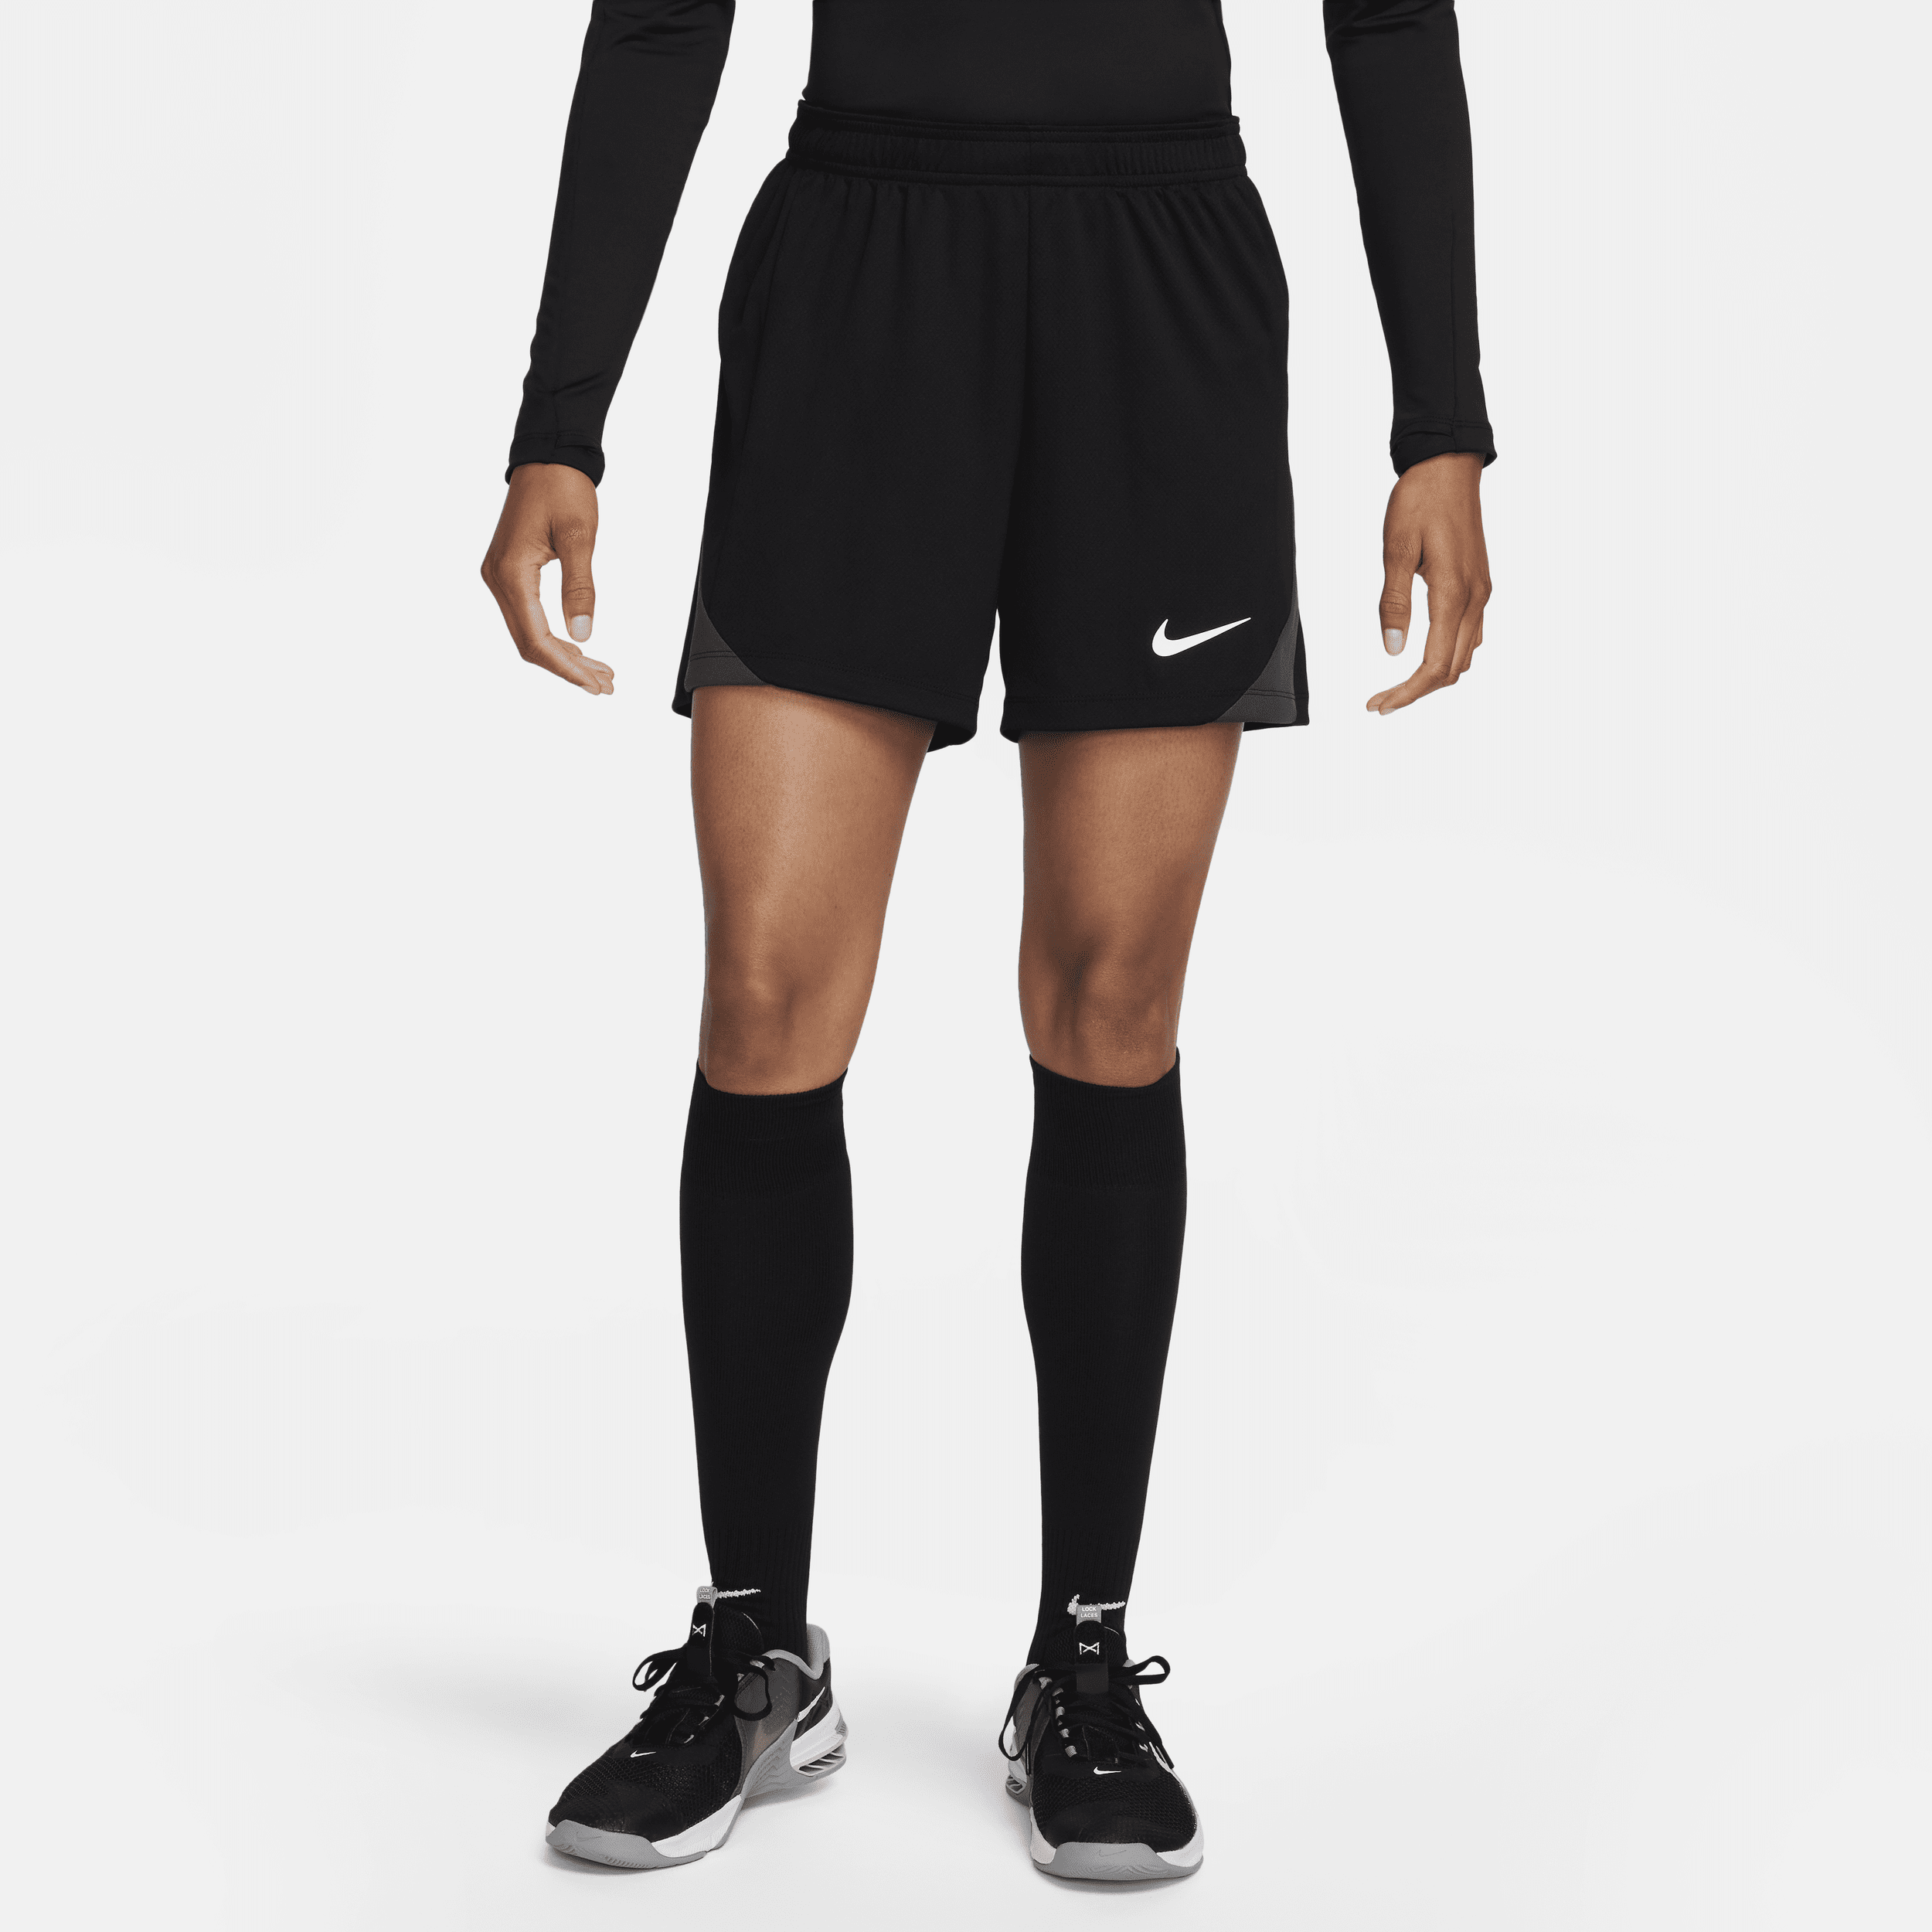 Nike Women's Strike Dri-fit Soccer Shorts In Black